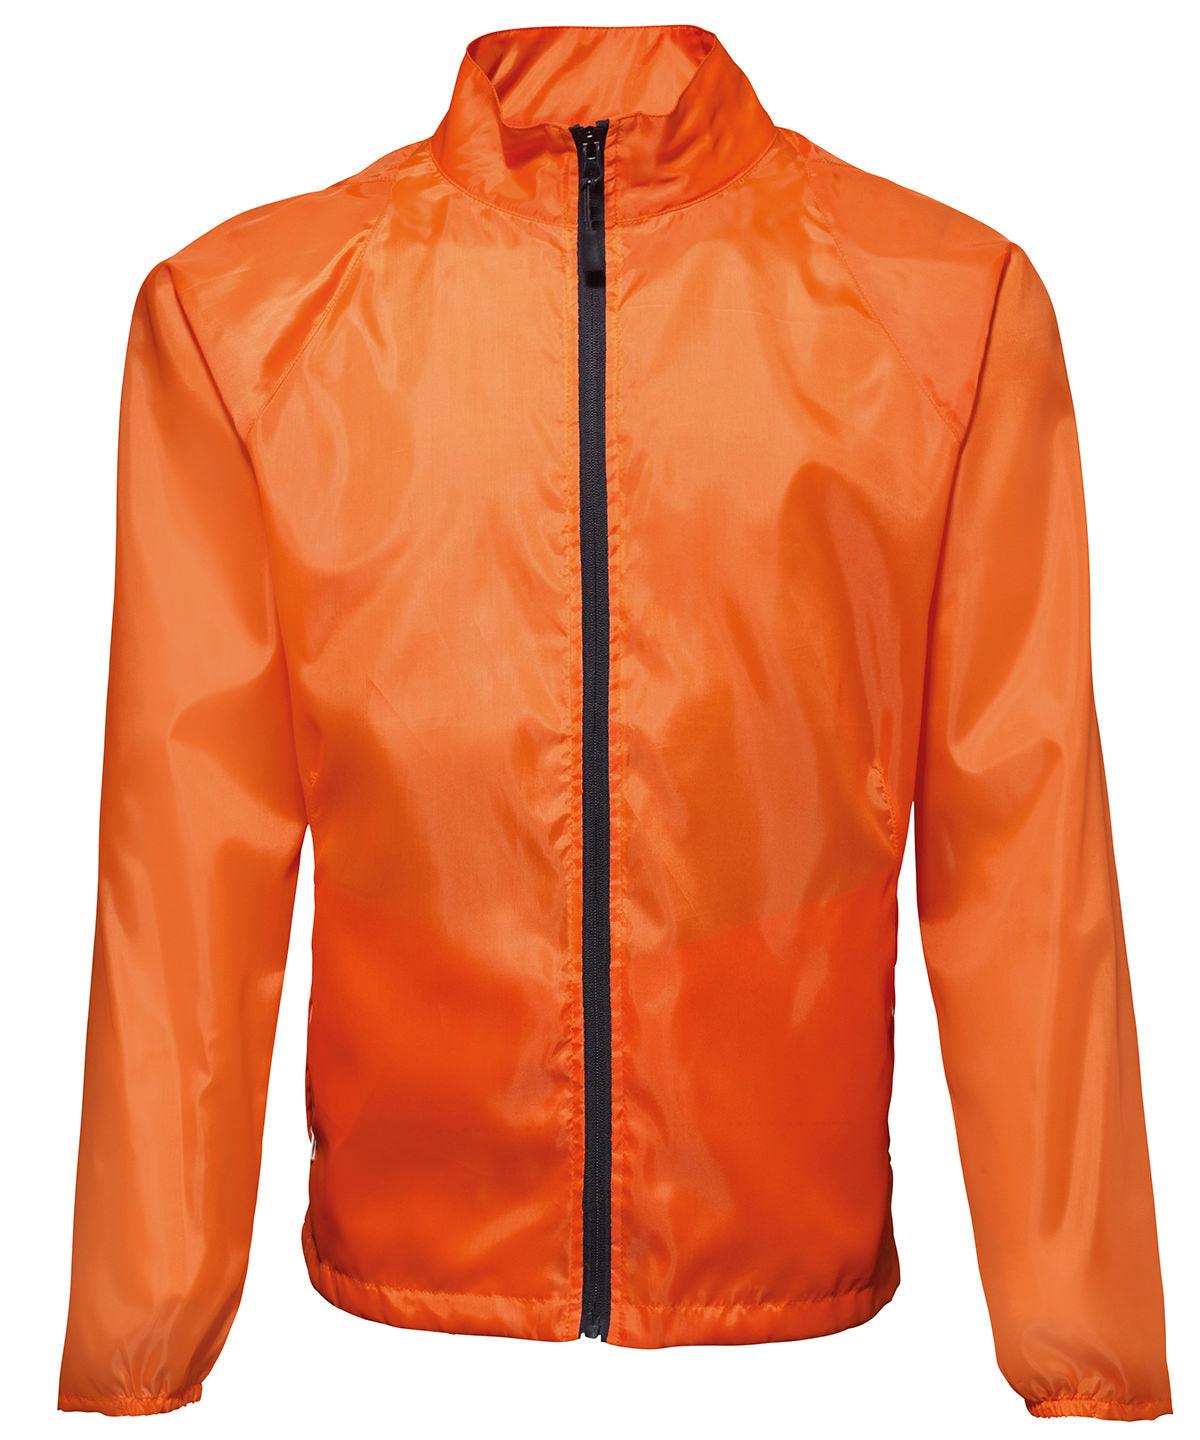 Orange/Black - Contrast lightweight jacket Jackets 2786 Alfresco Dining, Camo, Jackets & Coats, Lightweight layers, Rebrandable, S/S 19 Trend Colours Schoolwear Centres